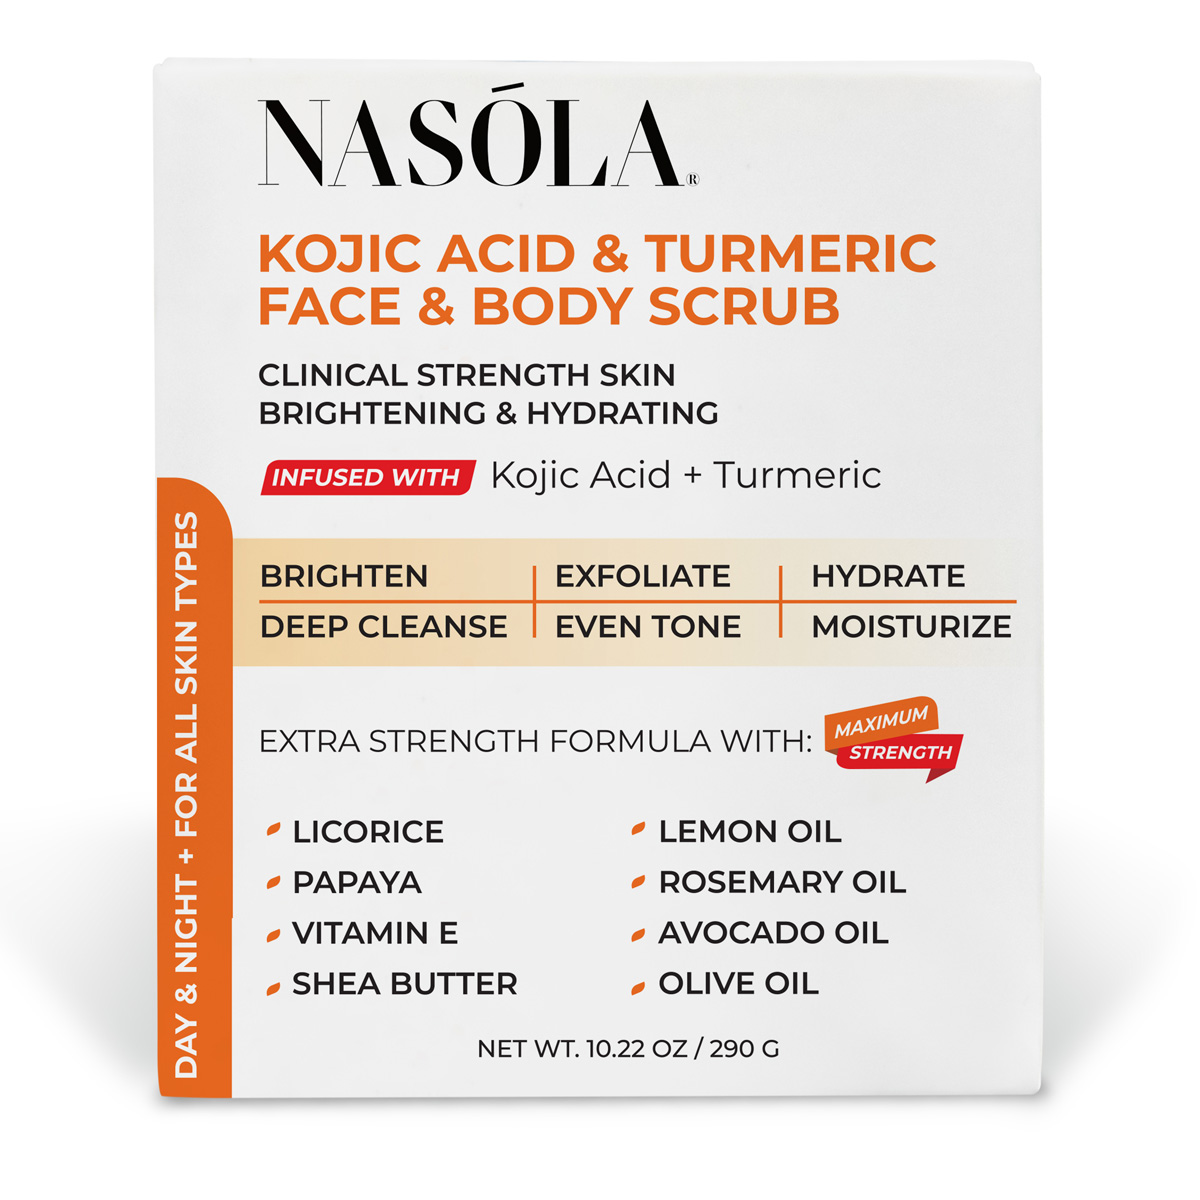 Nasola Kojic Acid & Turmeric Face & Body Scrub